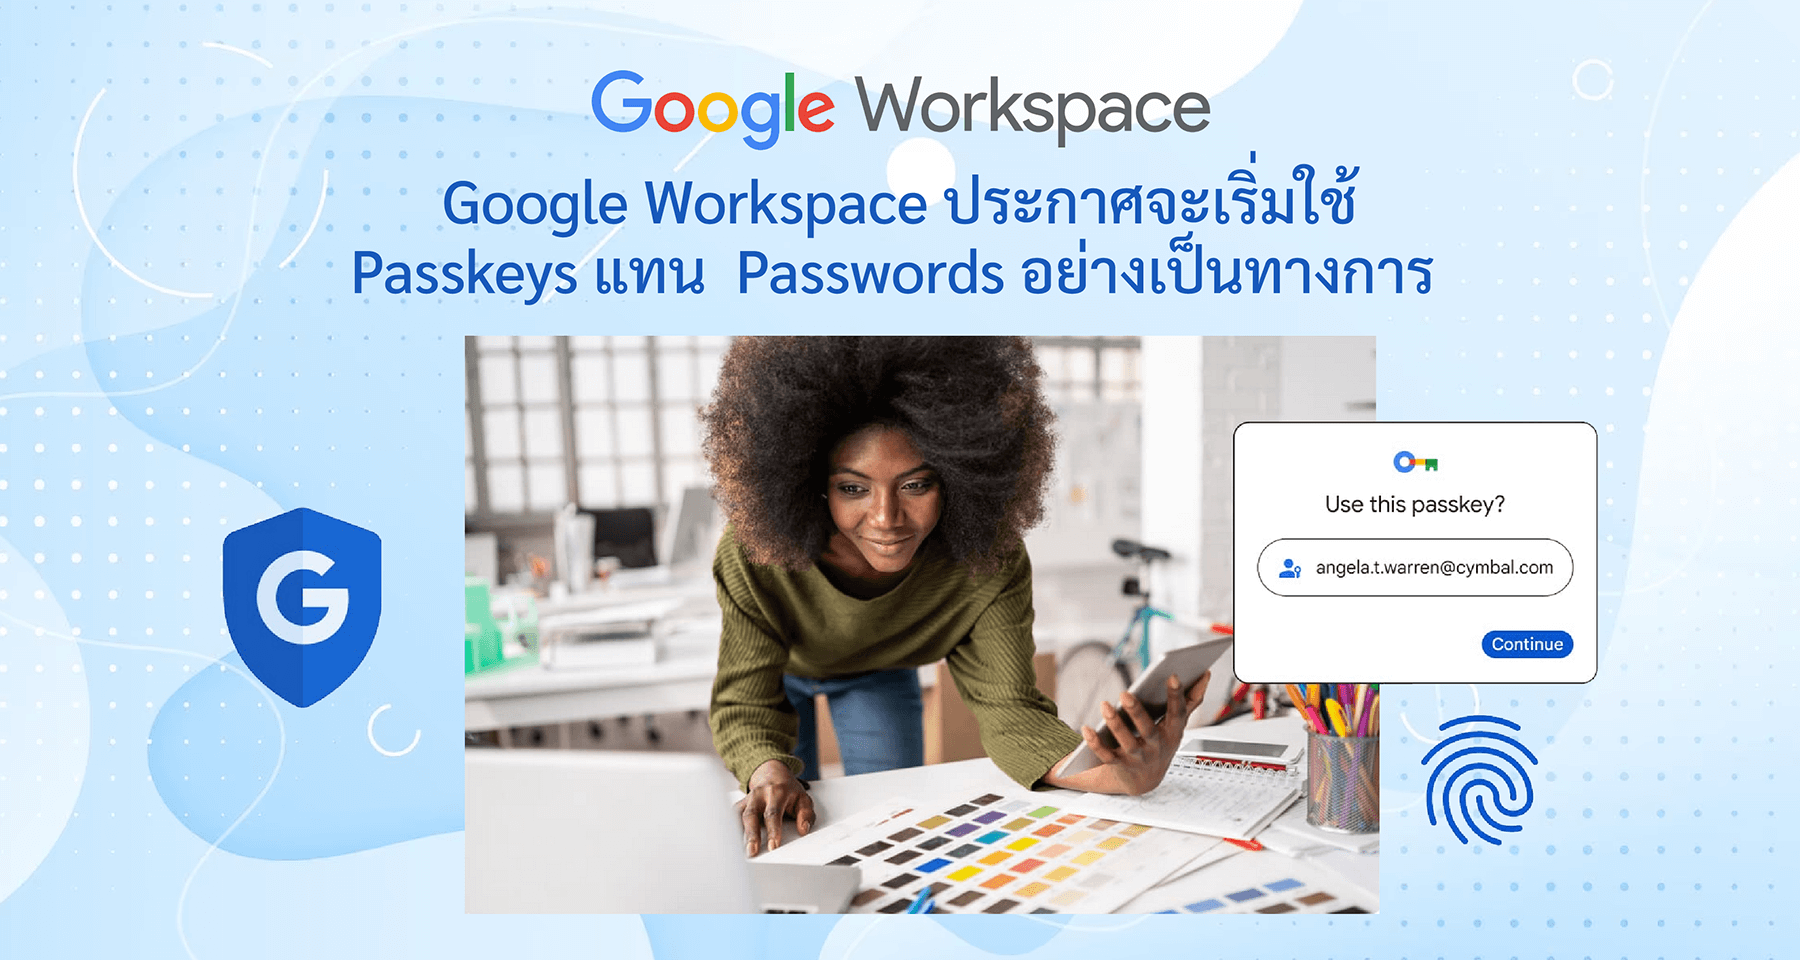 Google Workspace ประกาศจะเริ่มใช้ Passkeys แทน Passwords อย่างเป็นทางการ